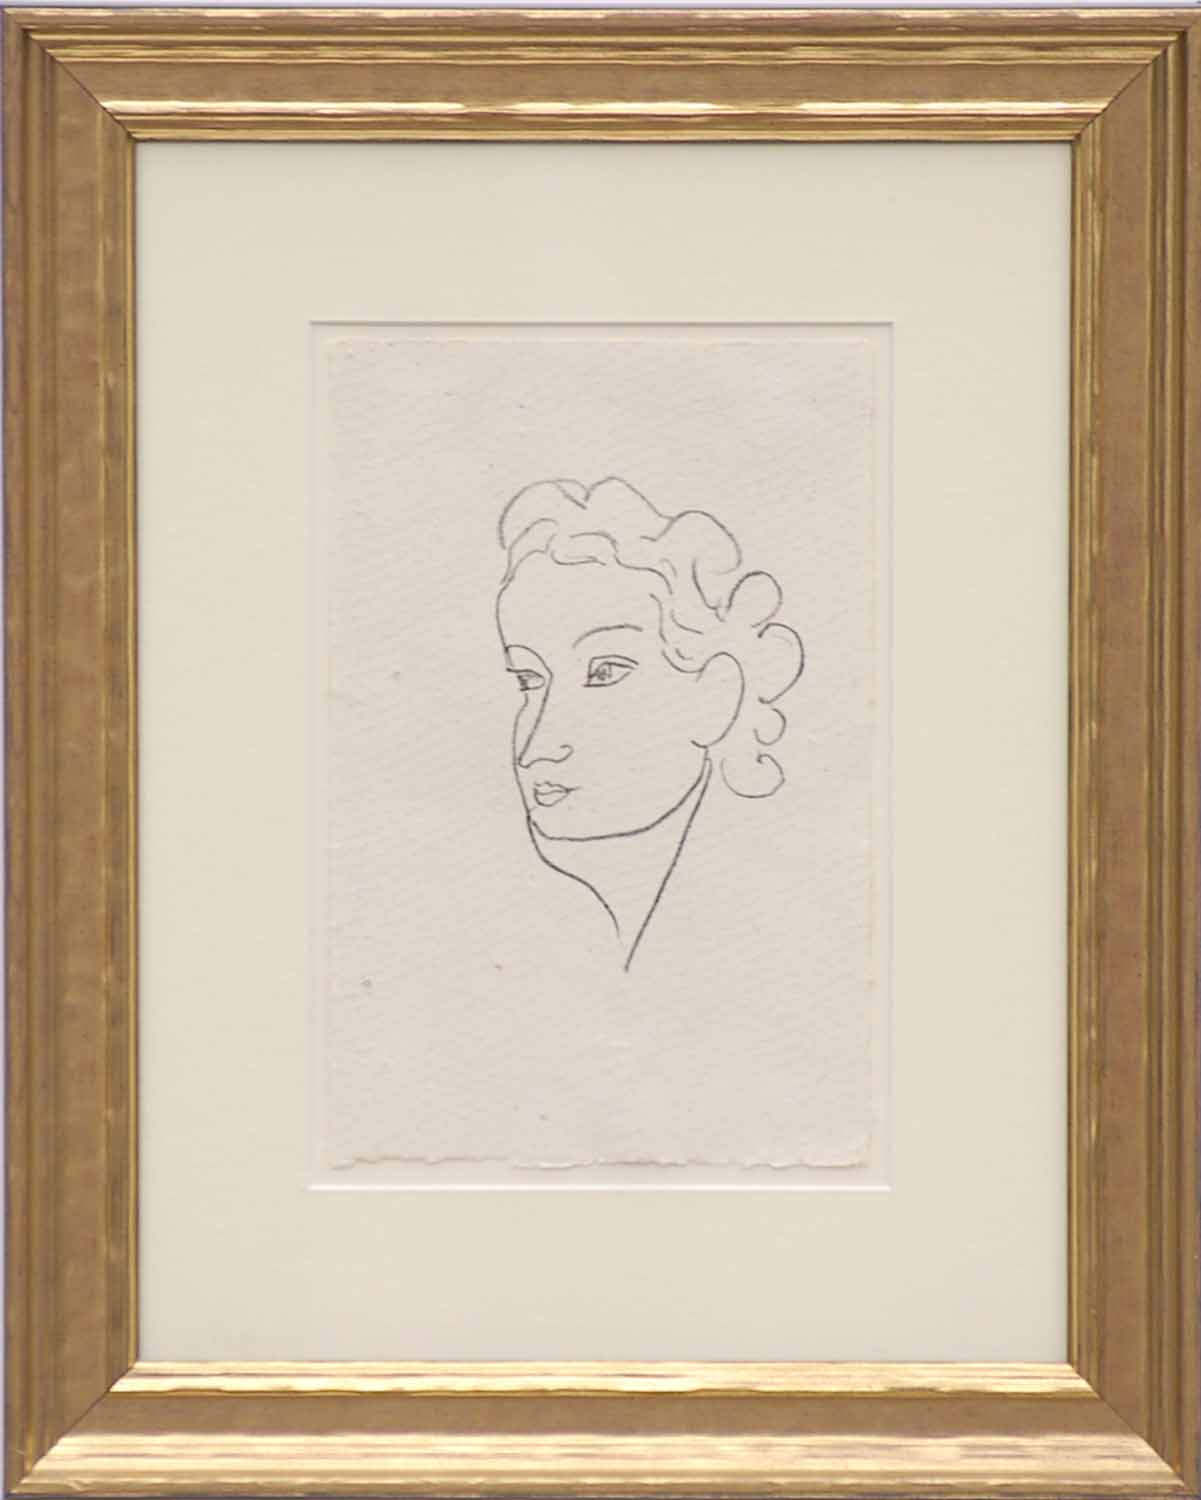 HENRI MATISSE 'Head of a Woman', 1947, lithograph, edition 370, suite: Repli,